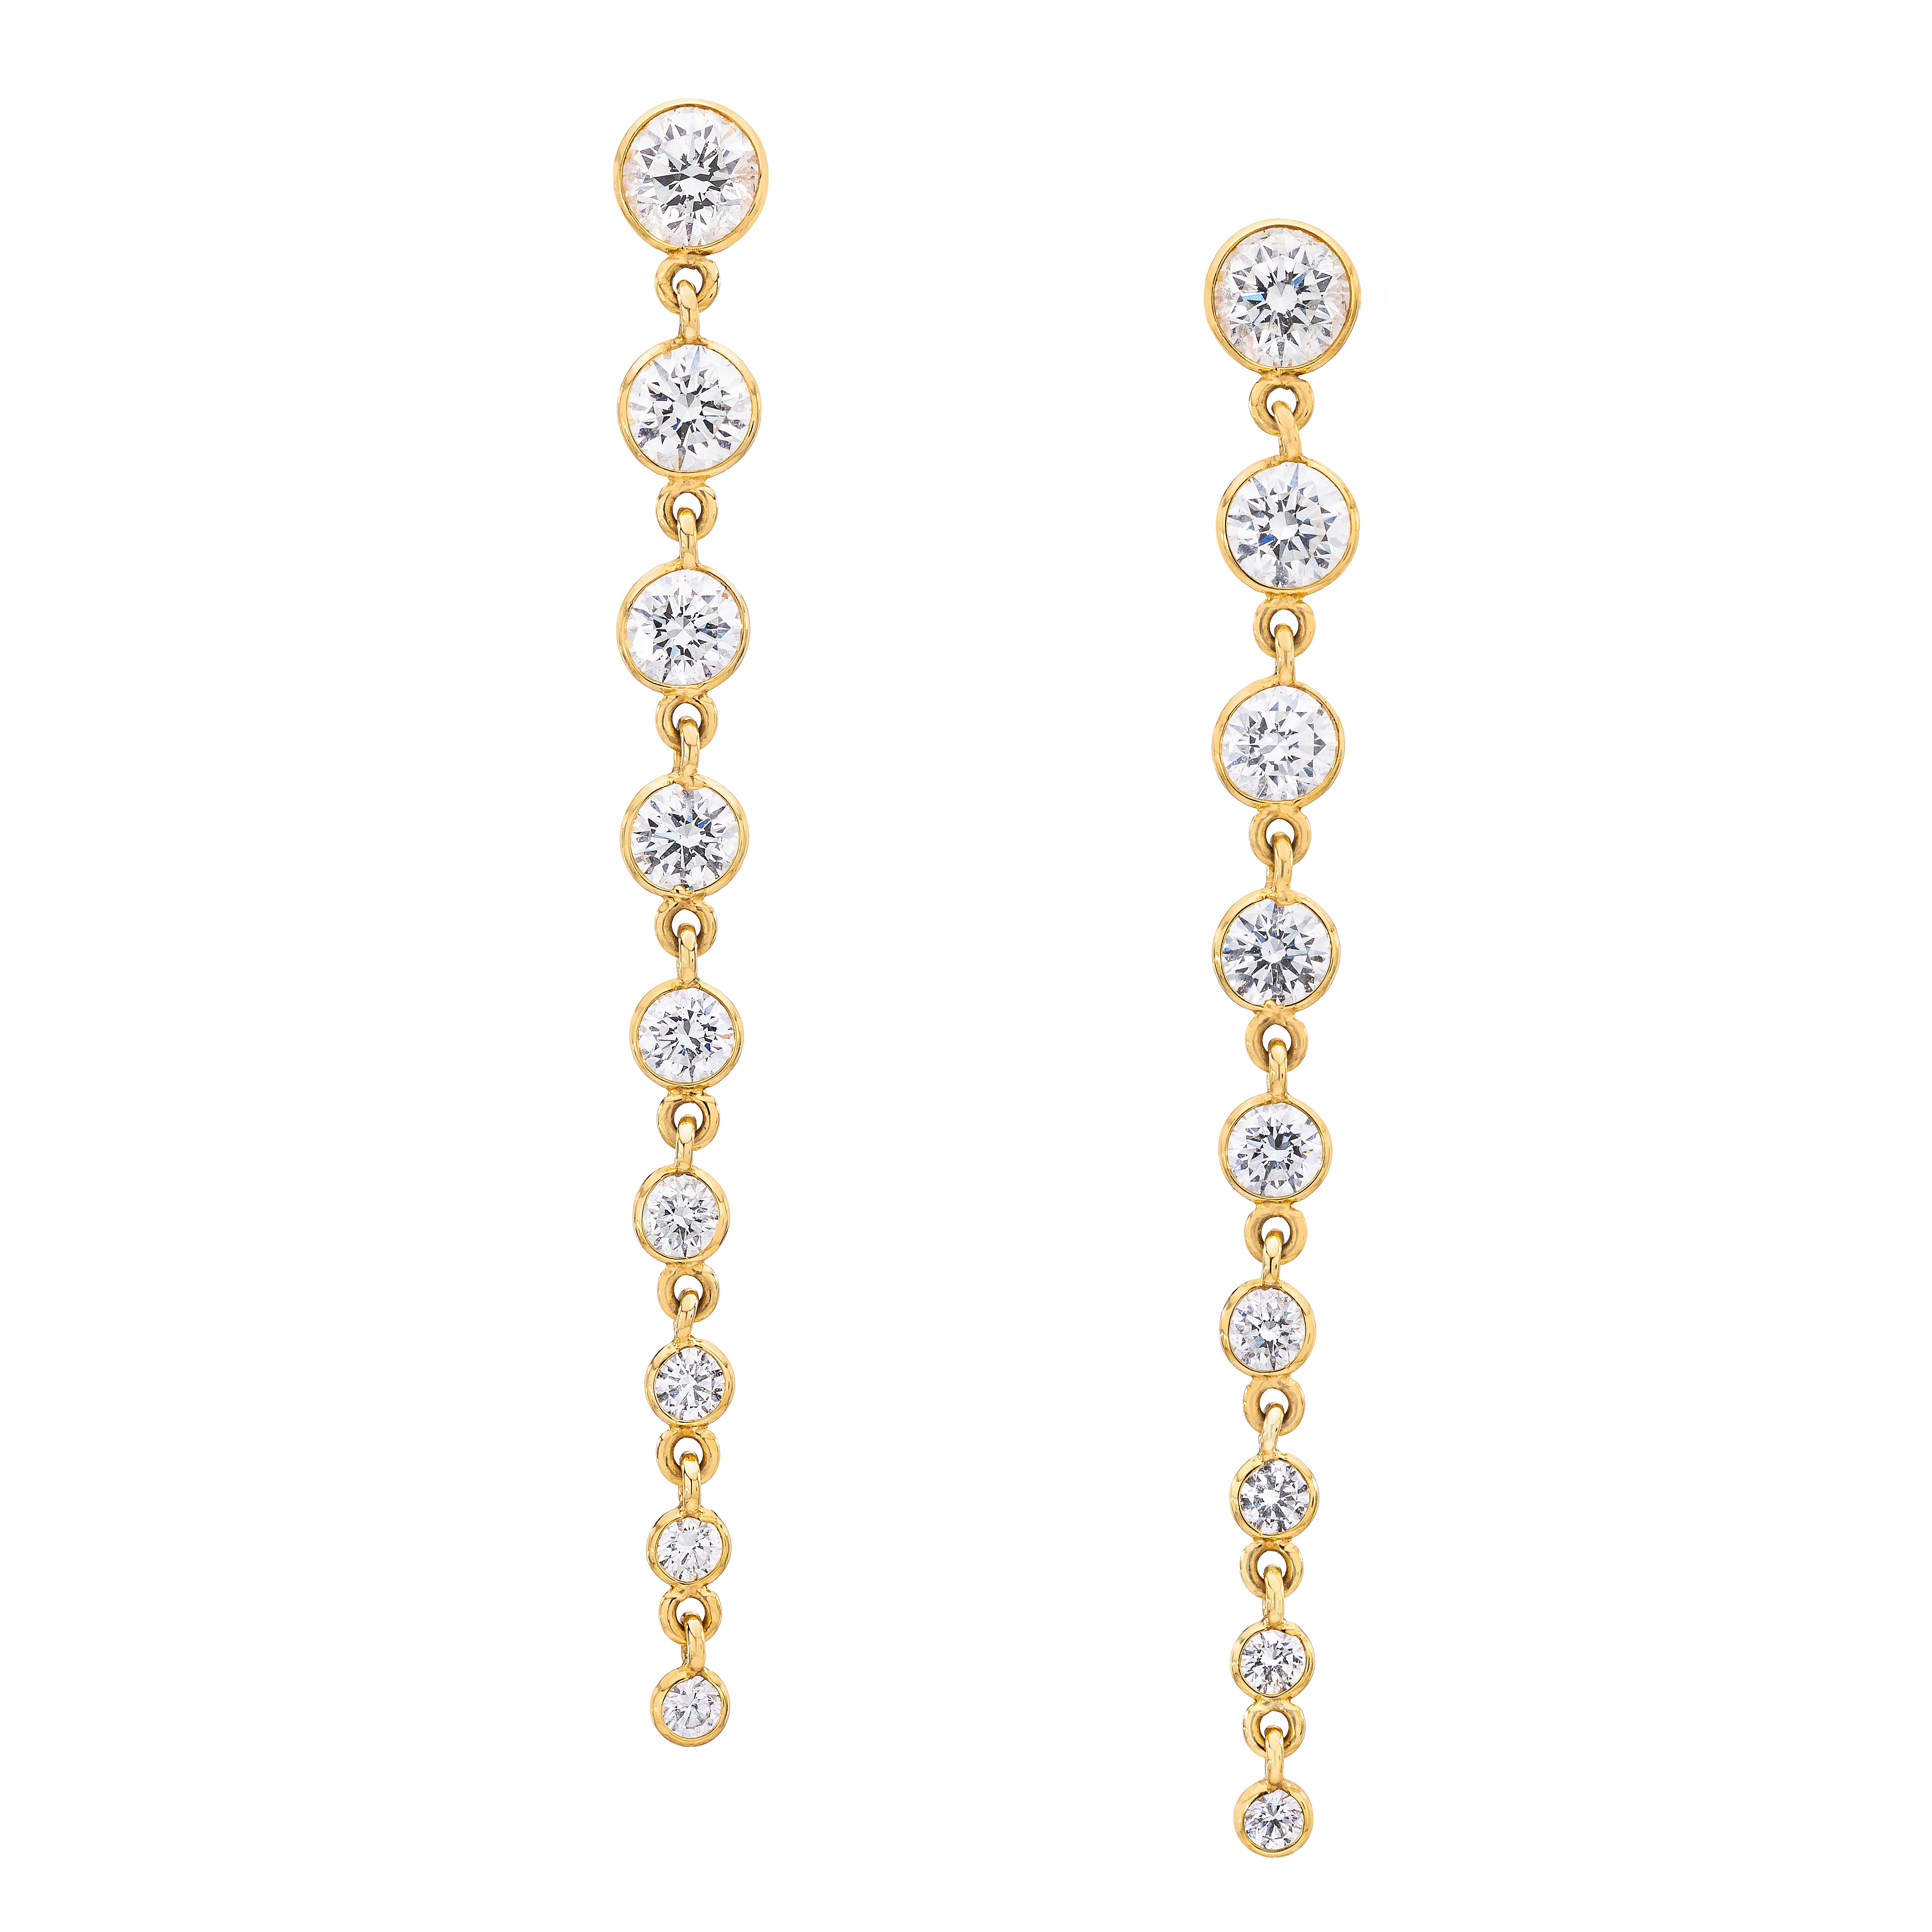 Boucles d'oreilles en or jaune 18 carats avec diamants gradués de 3,14 carats